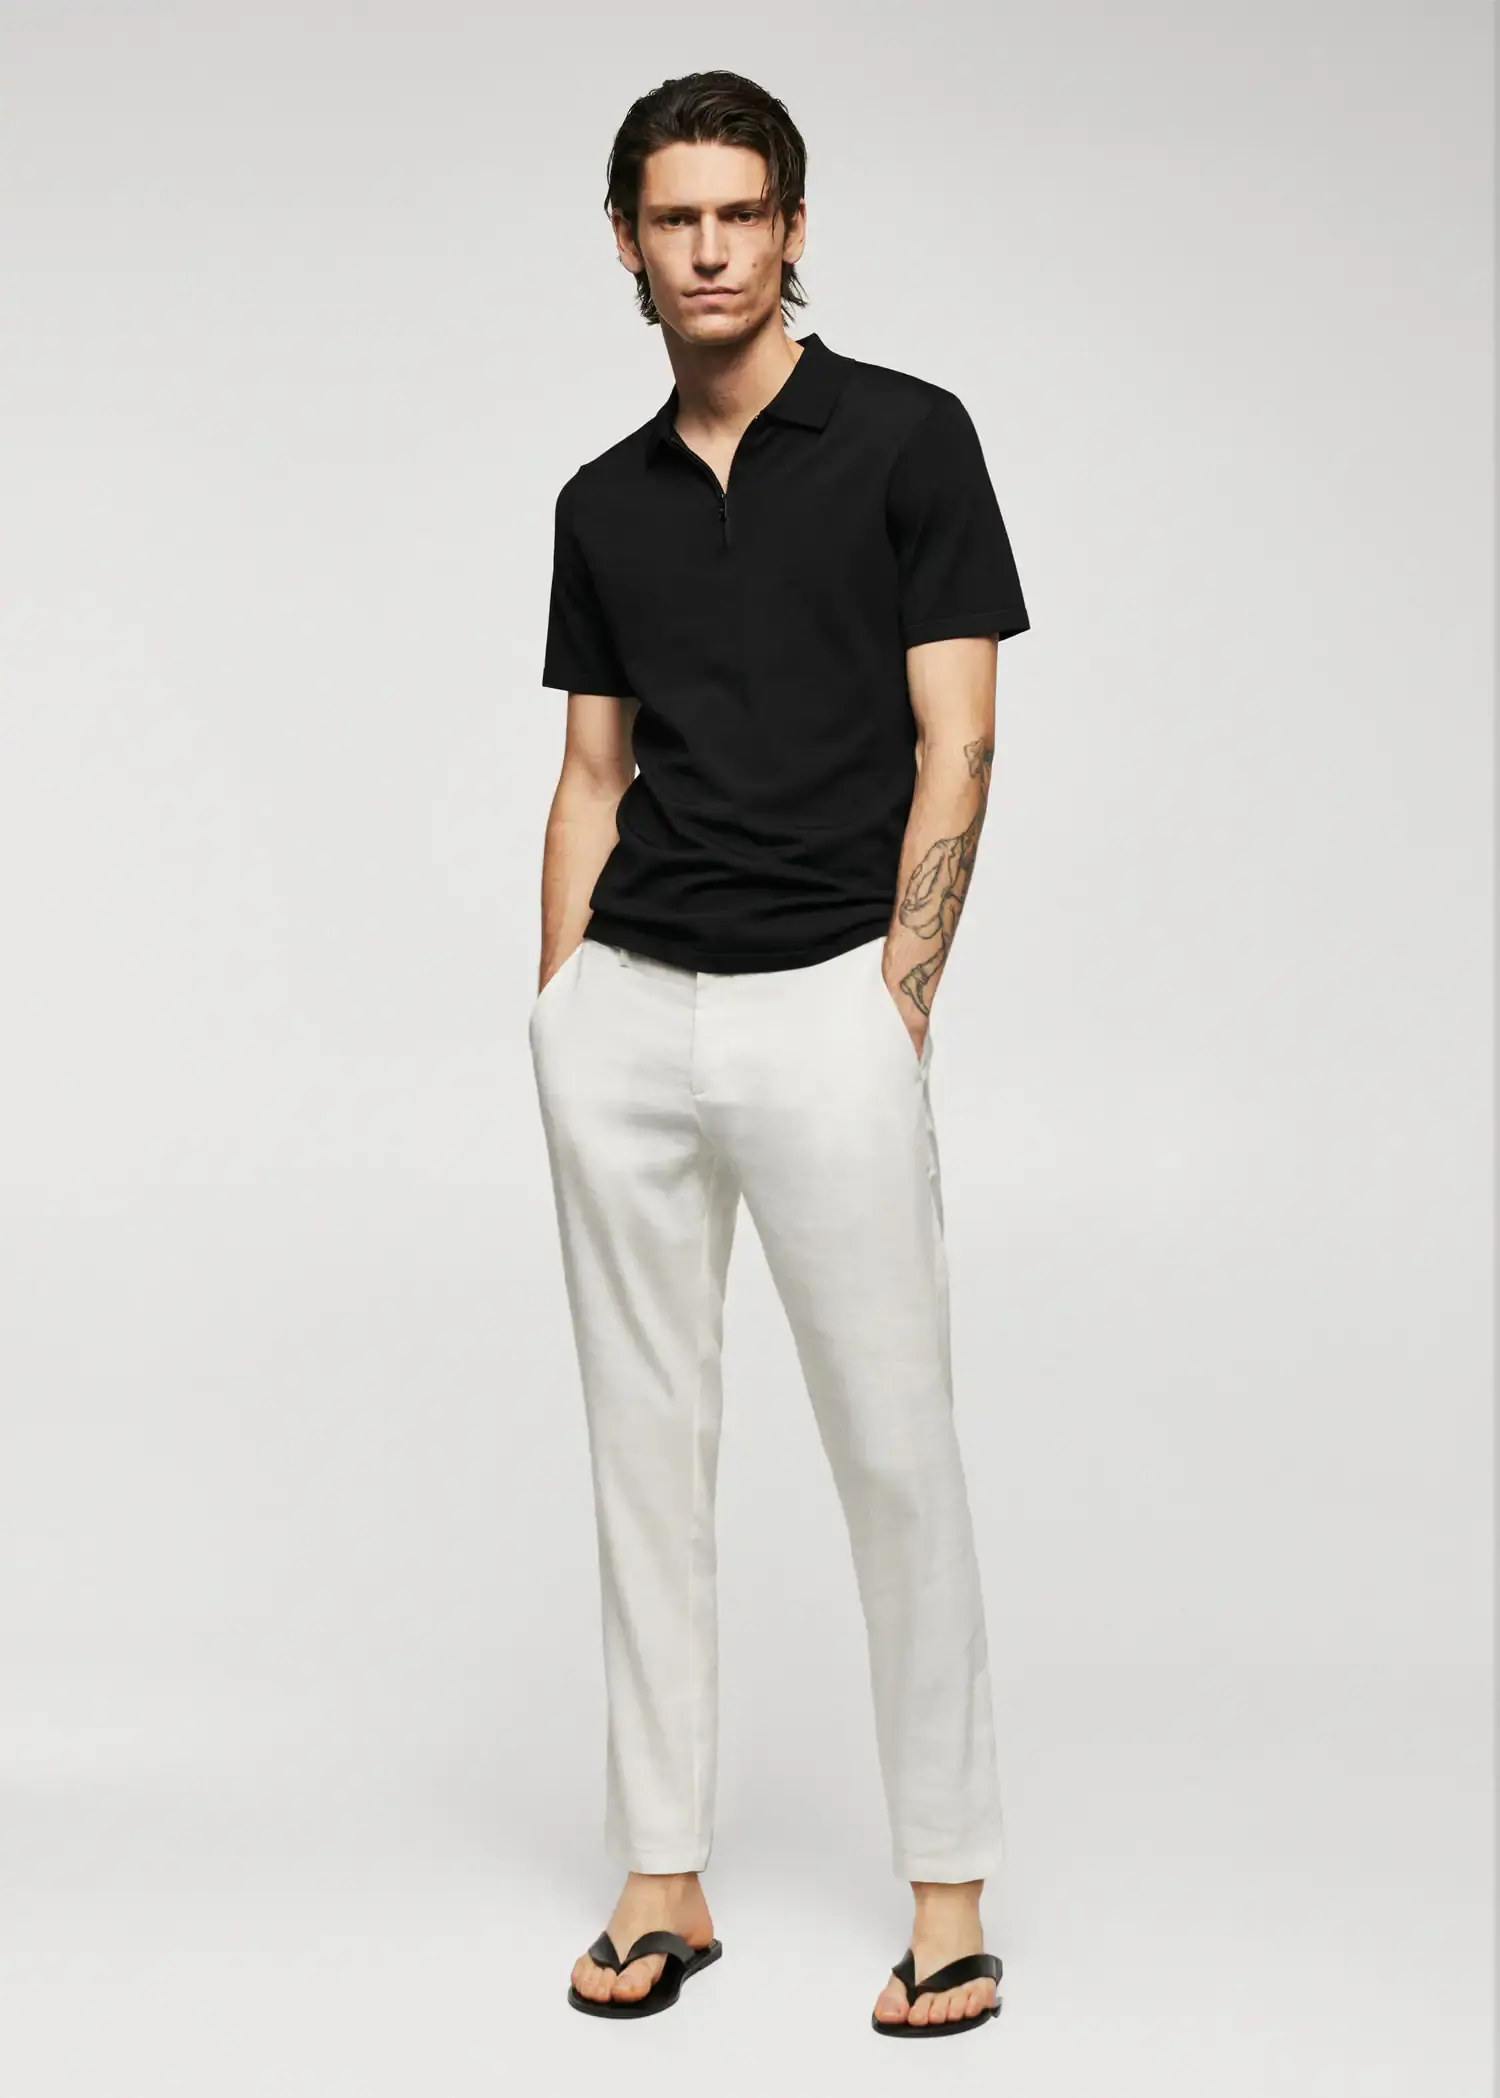 Mango Fine-knit polo shirt with zip. a man wearing a black shirt and white pants. 